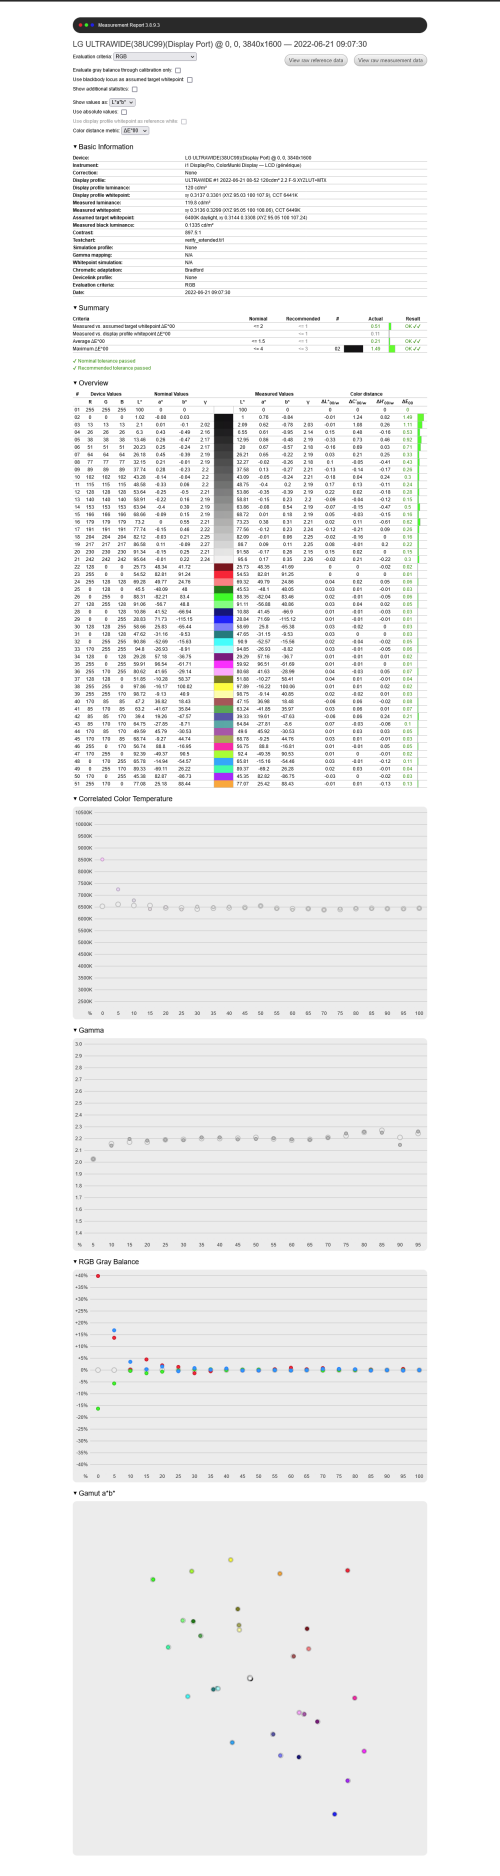 Screenshot 2022 06 21 at 09 08 02 Measurement Report 3.8.9.3 — LG ULTRAWIDE(38UC99)(Display Port) @ 